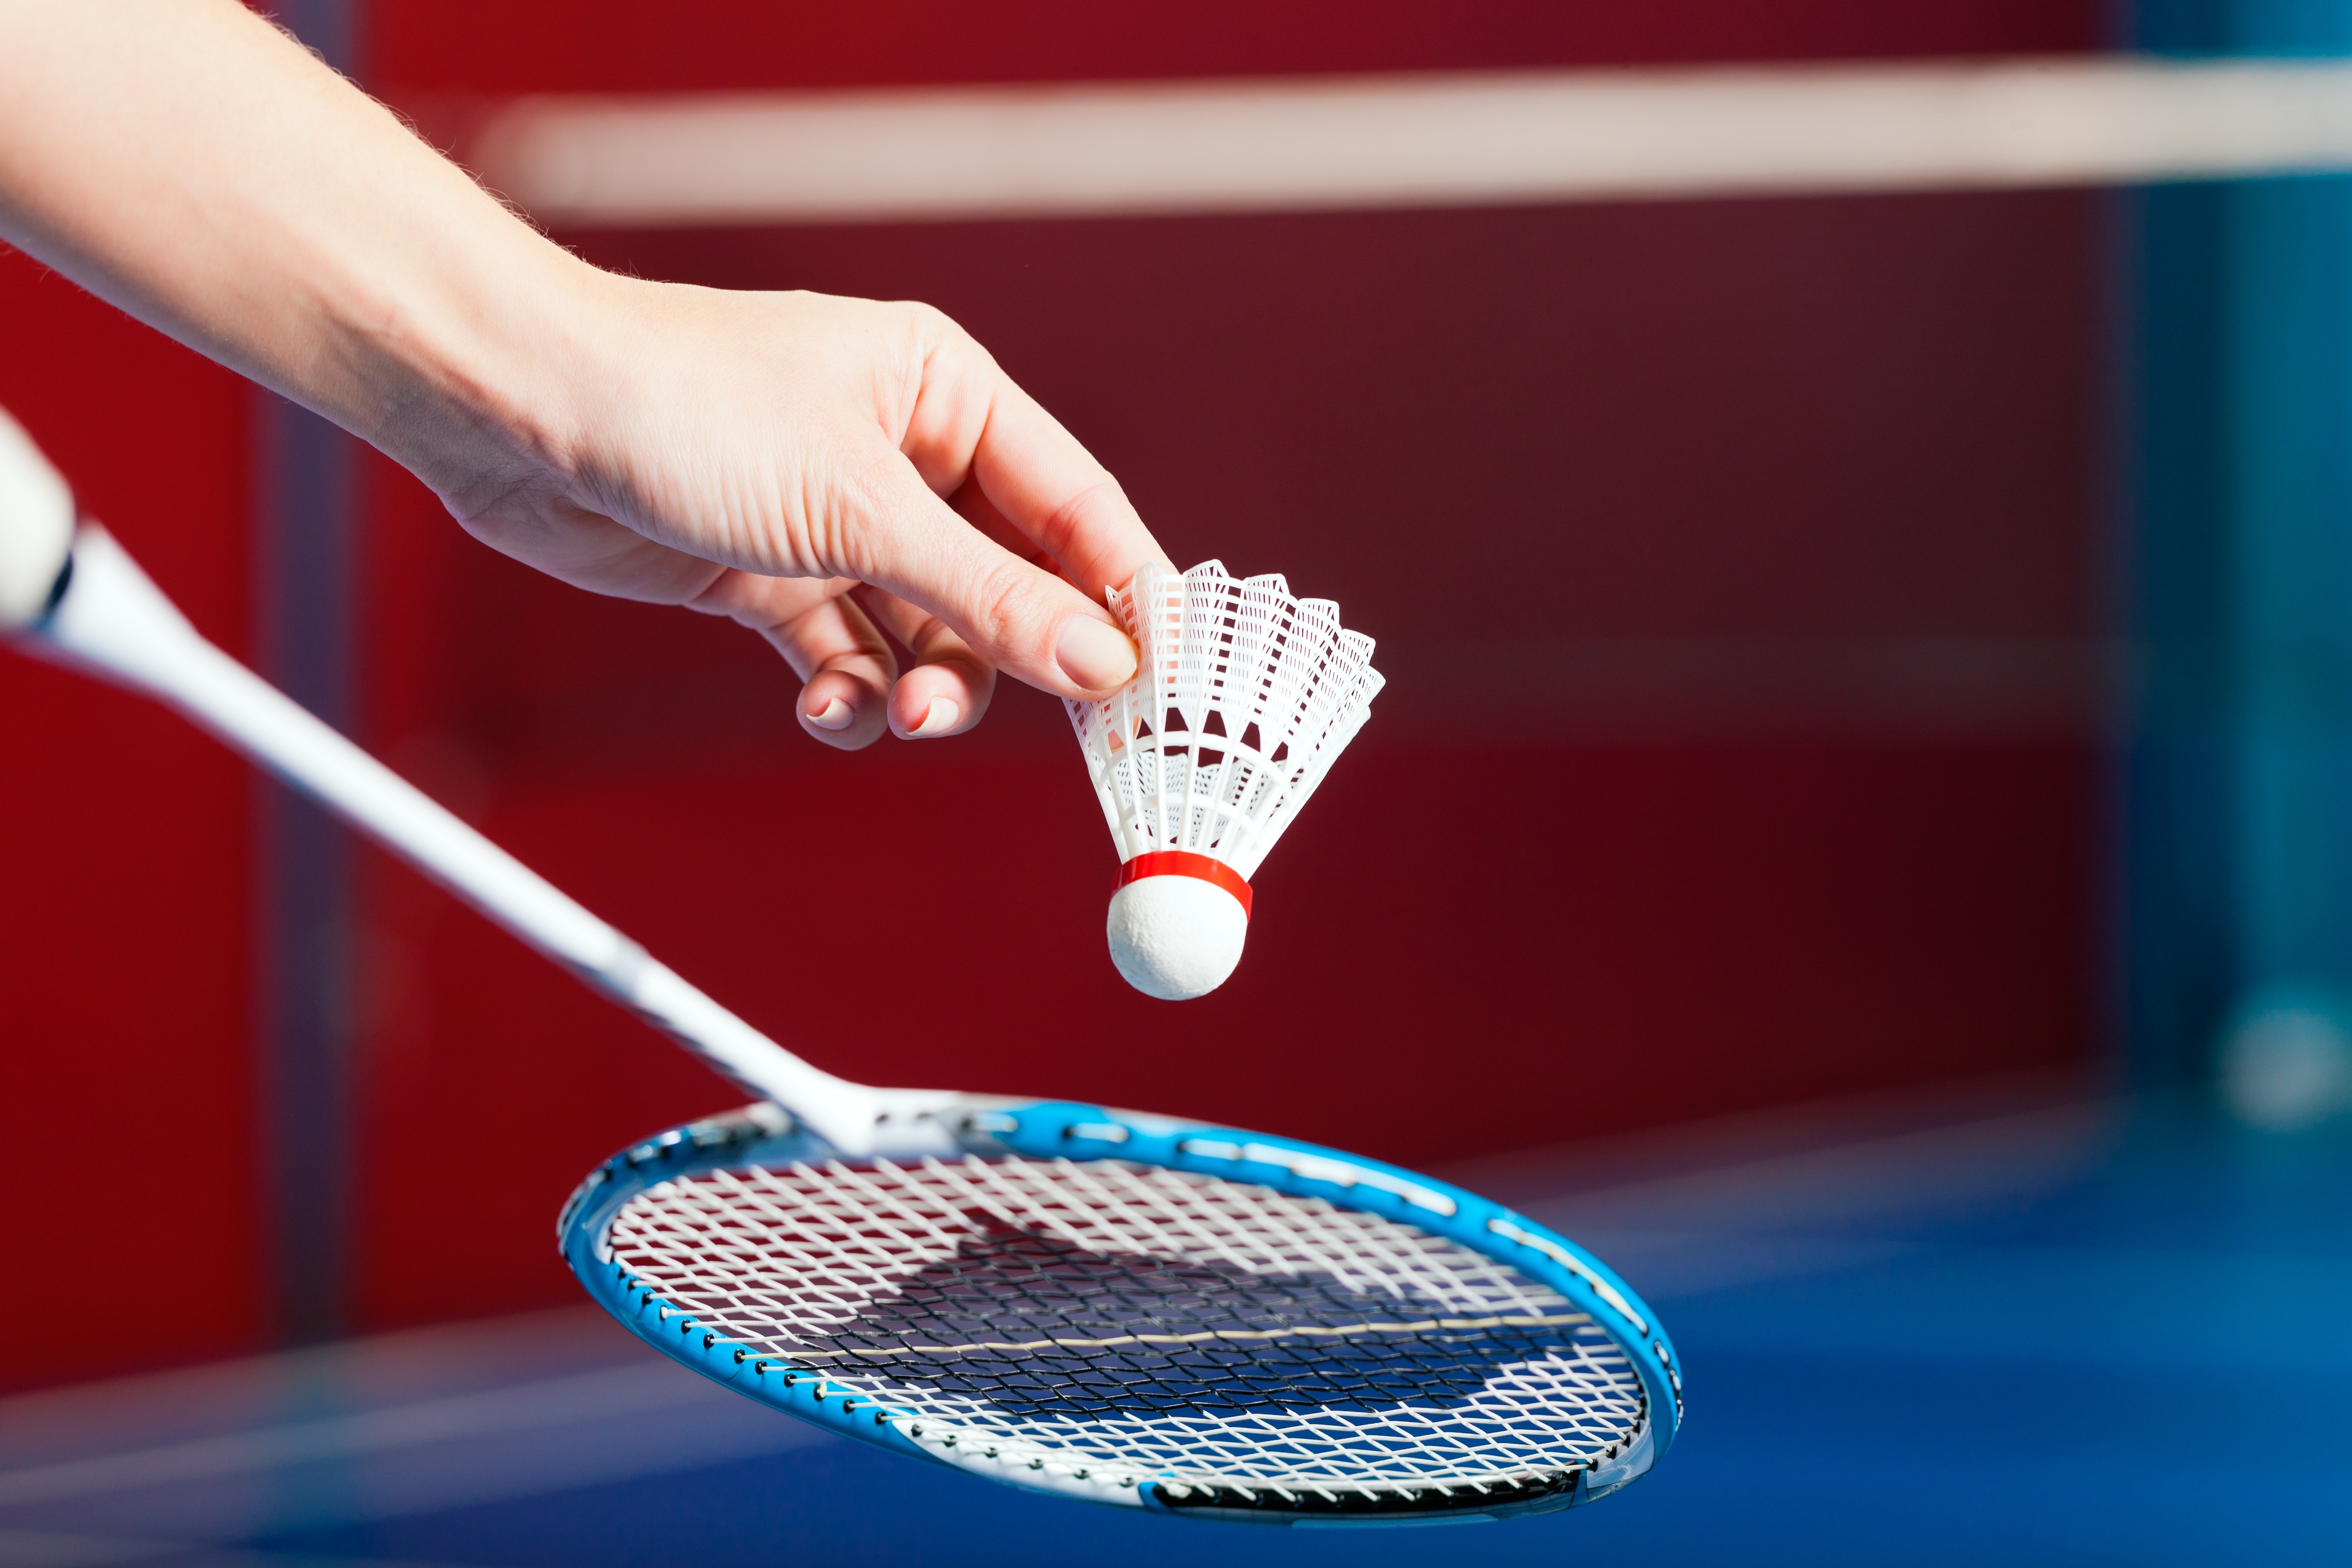 BBC unites with Sportradar for badminton broadcasting deal